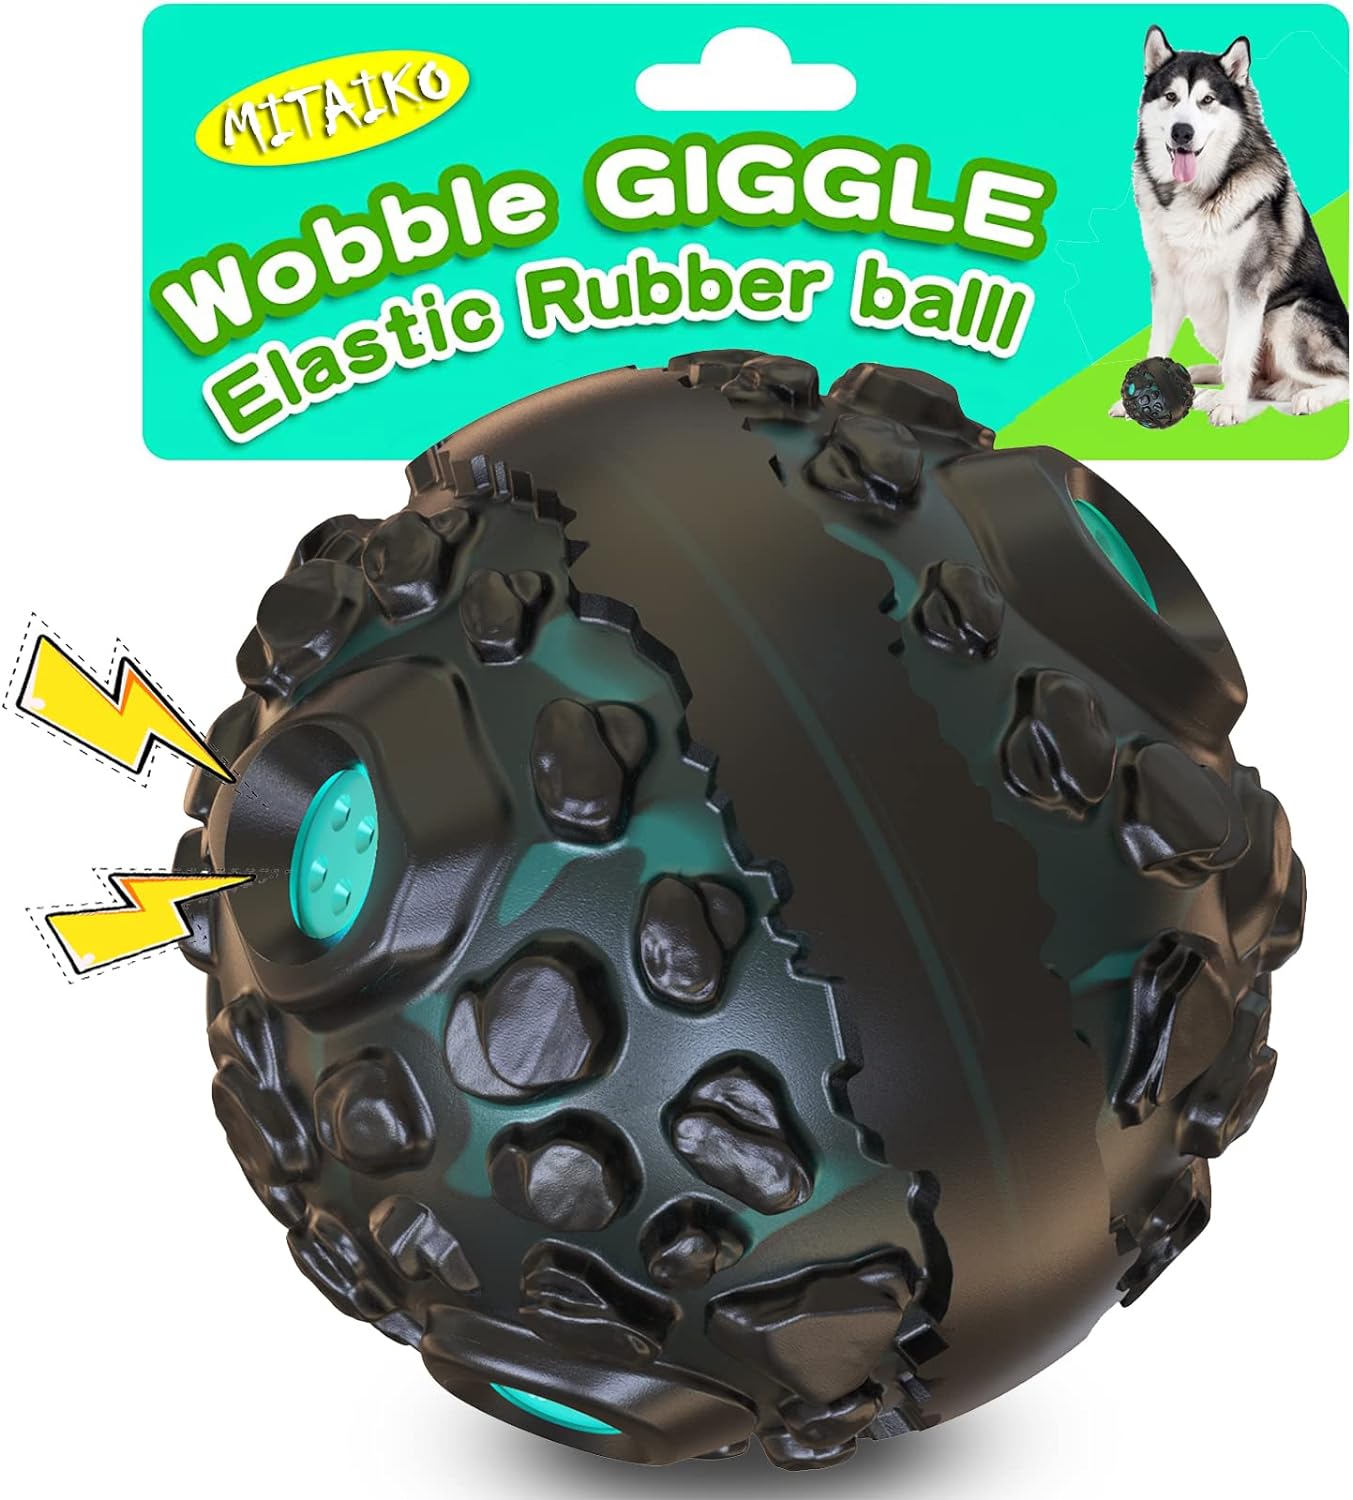 CollectFuns Interactive Fetch Dog Ball with Fun Squeaky Wobble Giggle Sound